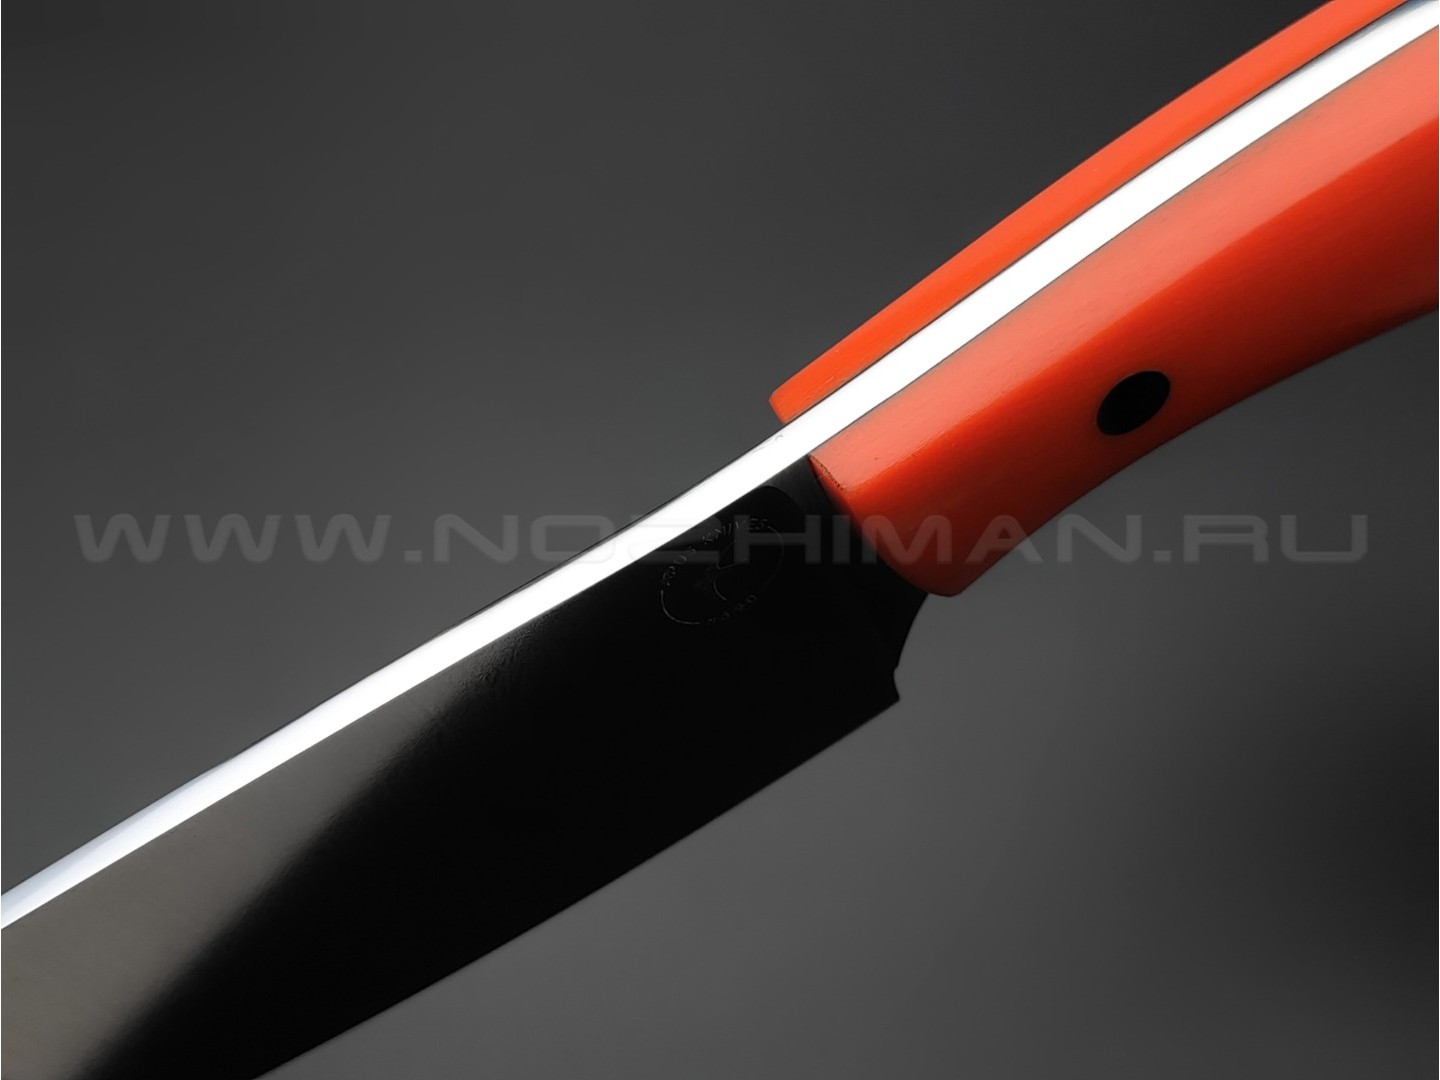 Apus Knives нож Santoku-M сталь N690, рукоять G10 orange